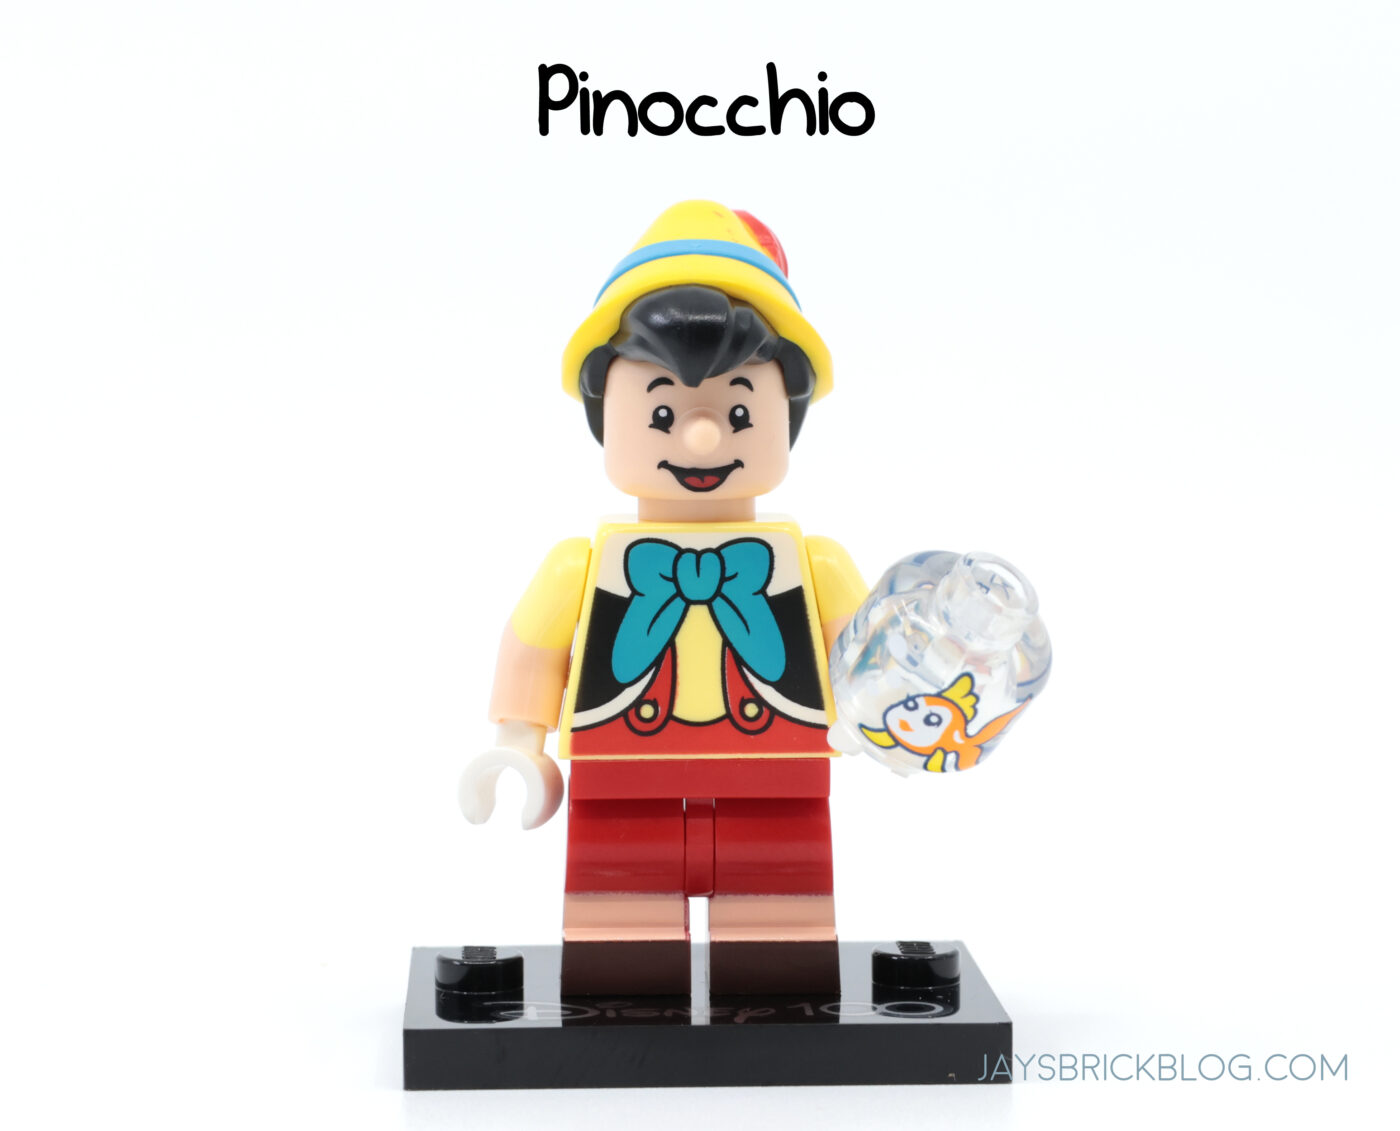 LEGO Stitch Collectible Minifigure - The Brick Chick